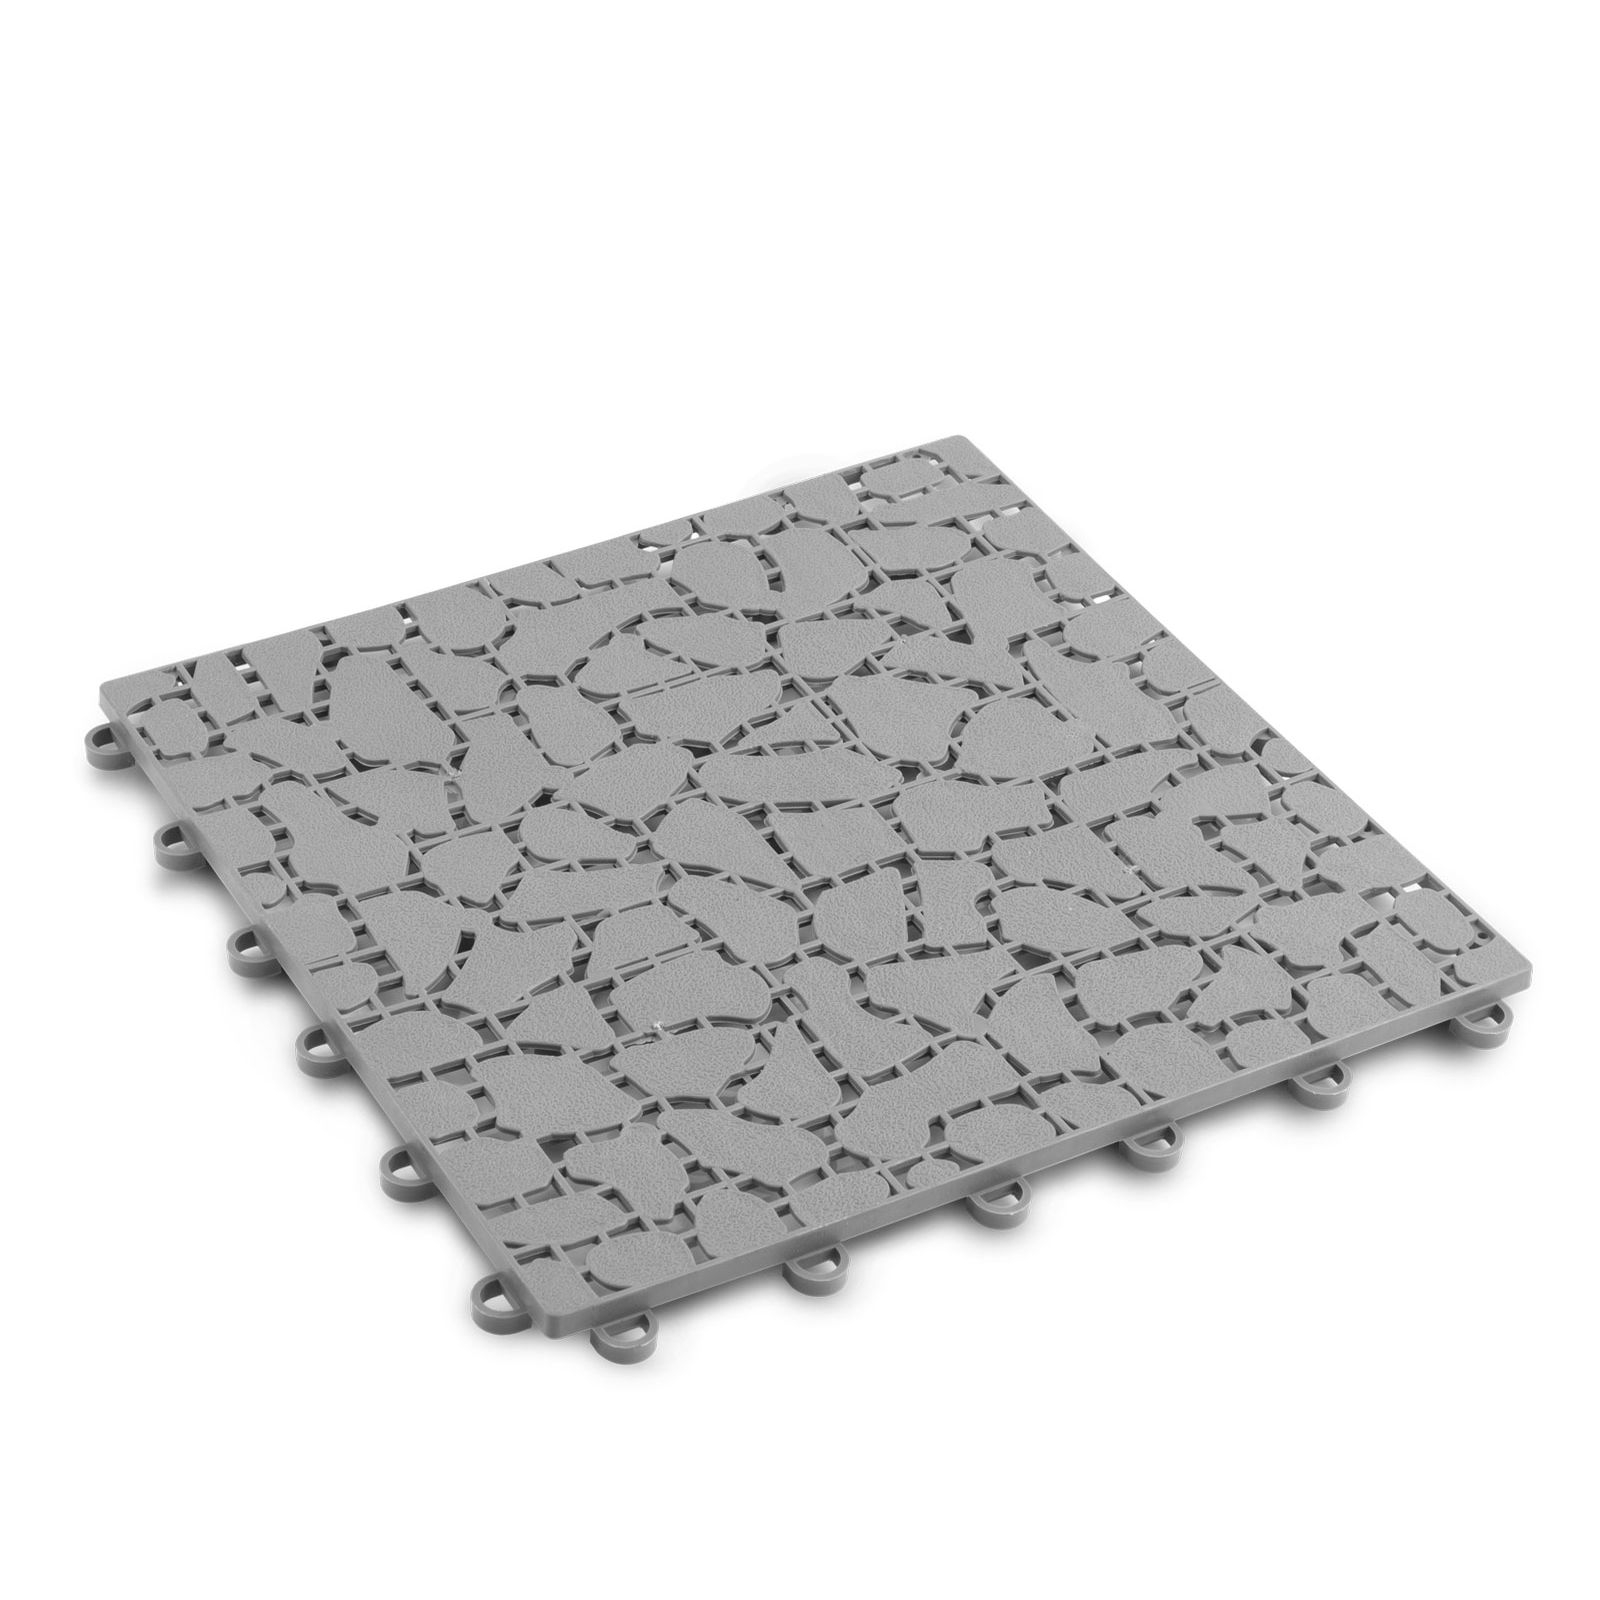 Paviment pentru gradina - model piatra - plastic - 29 x 29 cm - gri - 4 buc pachet